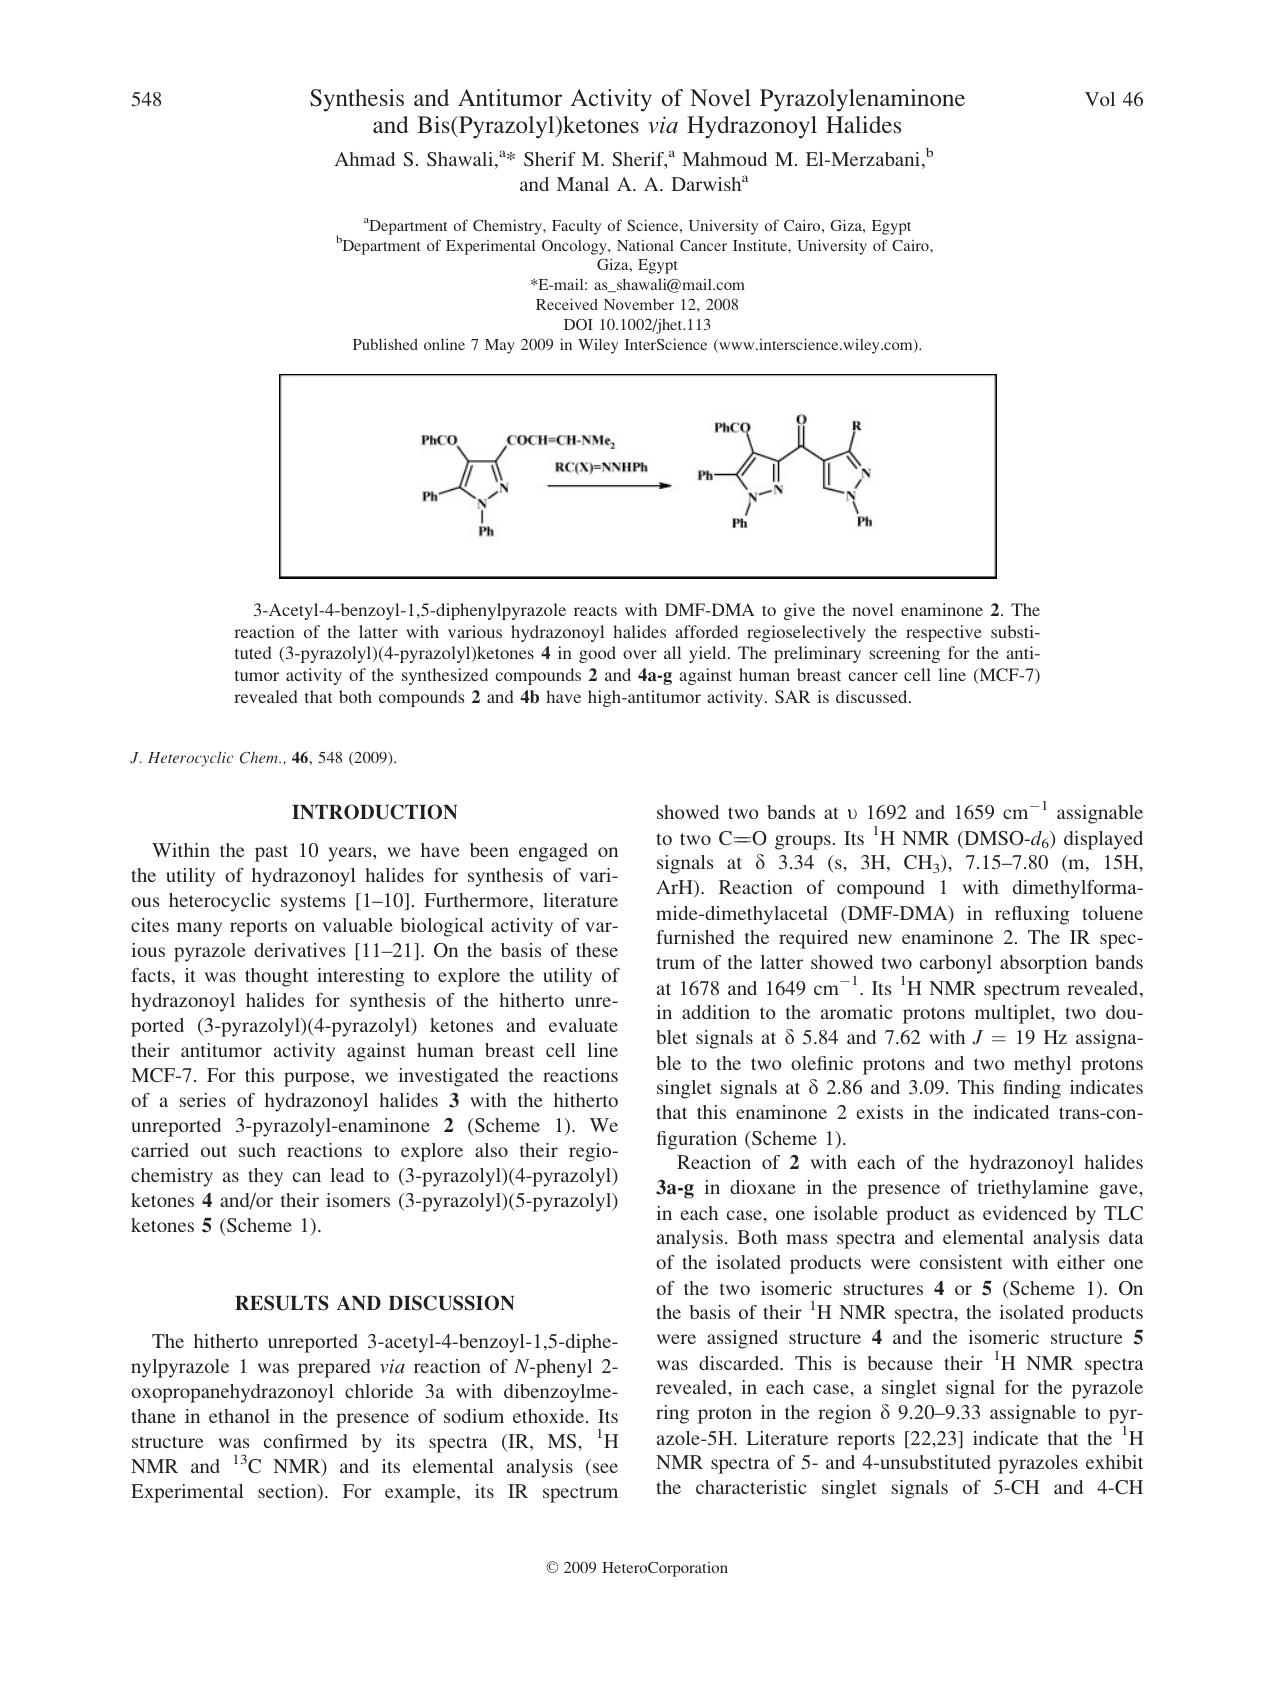 Synthesis and antitumor activity of novel pyrazolylenaminone and bis(pyrazolyl)ketones via hydrazonoyl halides by Unknown